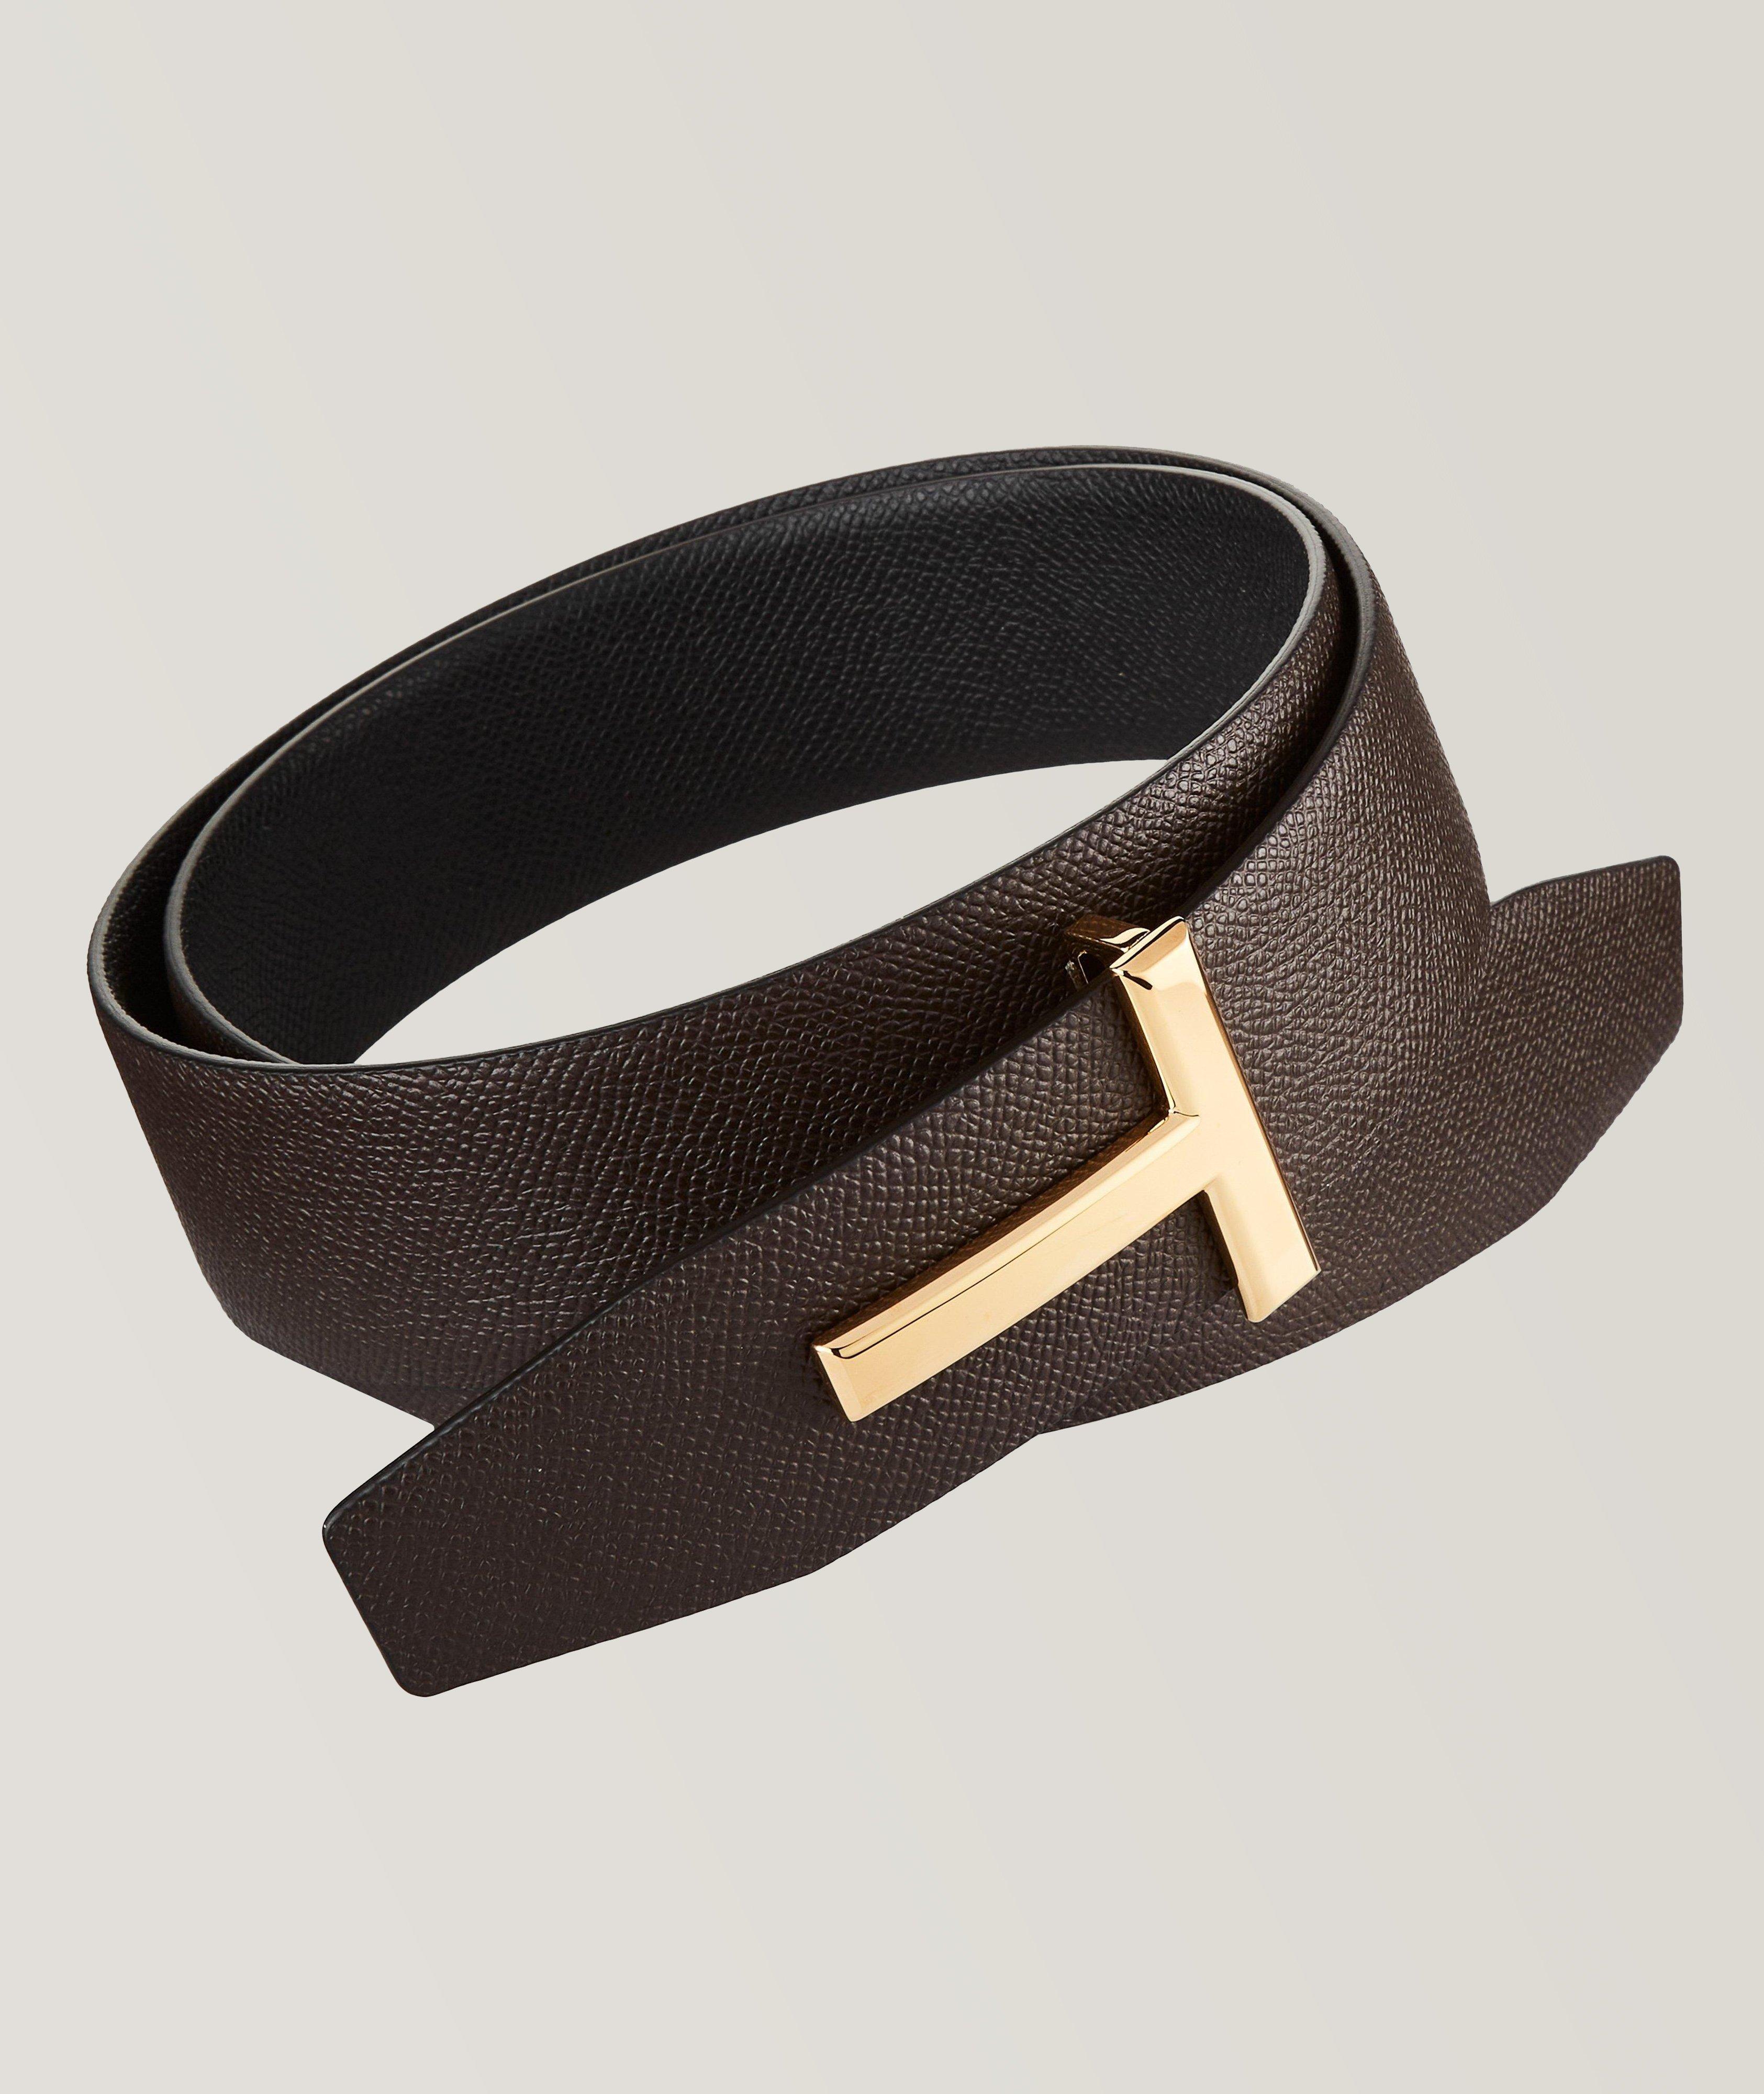 TOM FORD Reversible T-Buckle Leather Belt, Belts